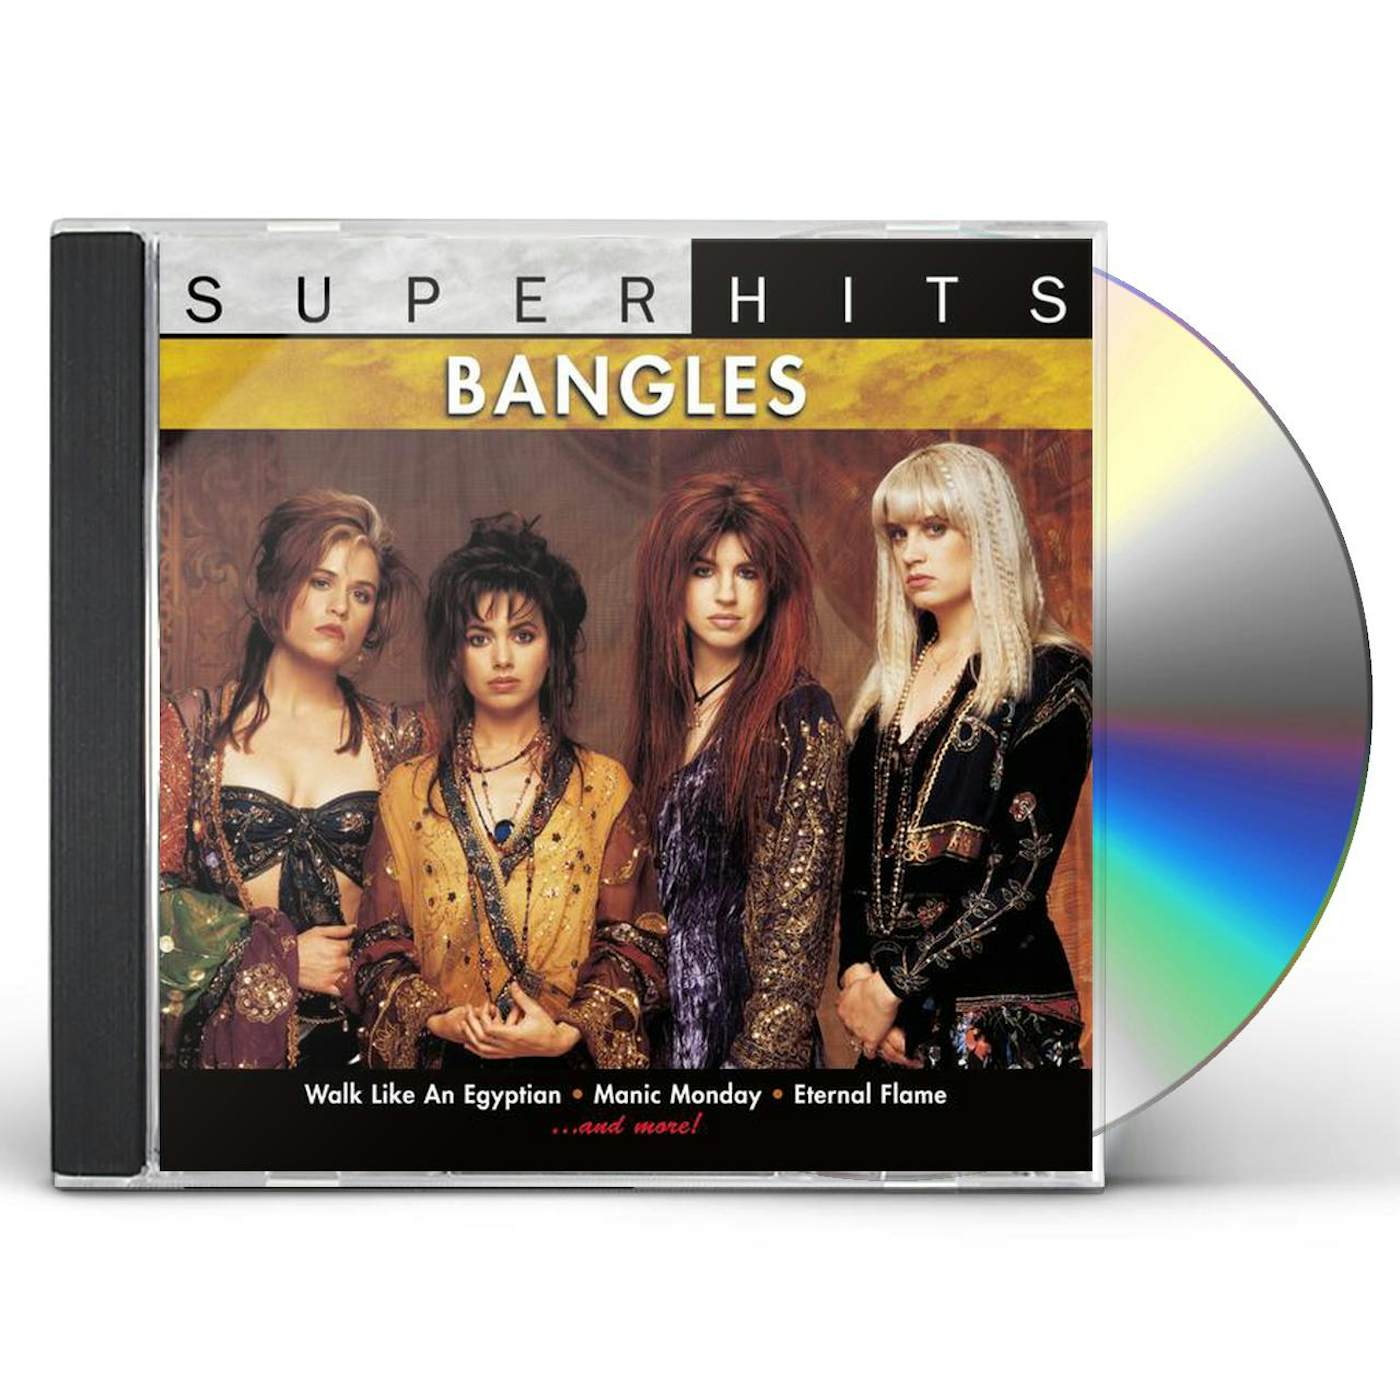 The Bangles SUPER HITS CD